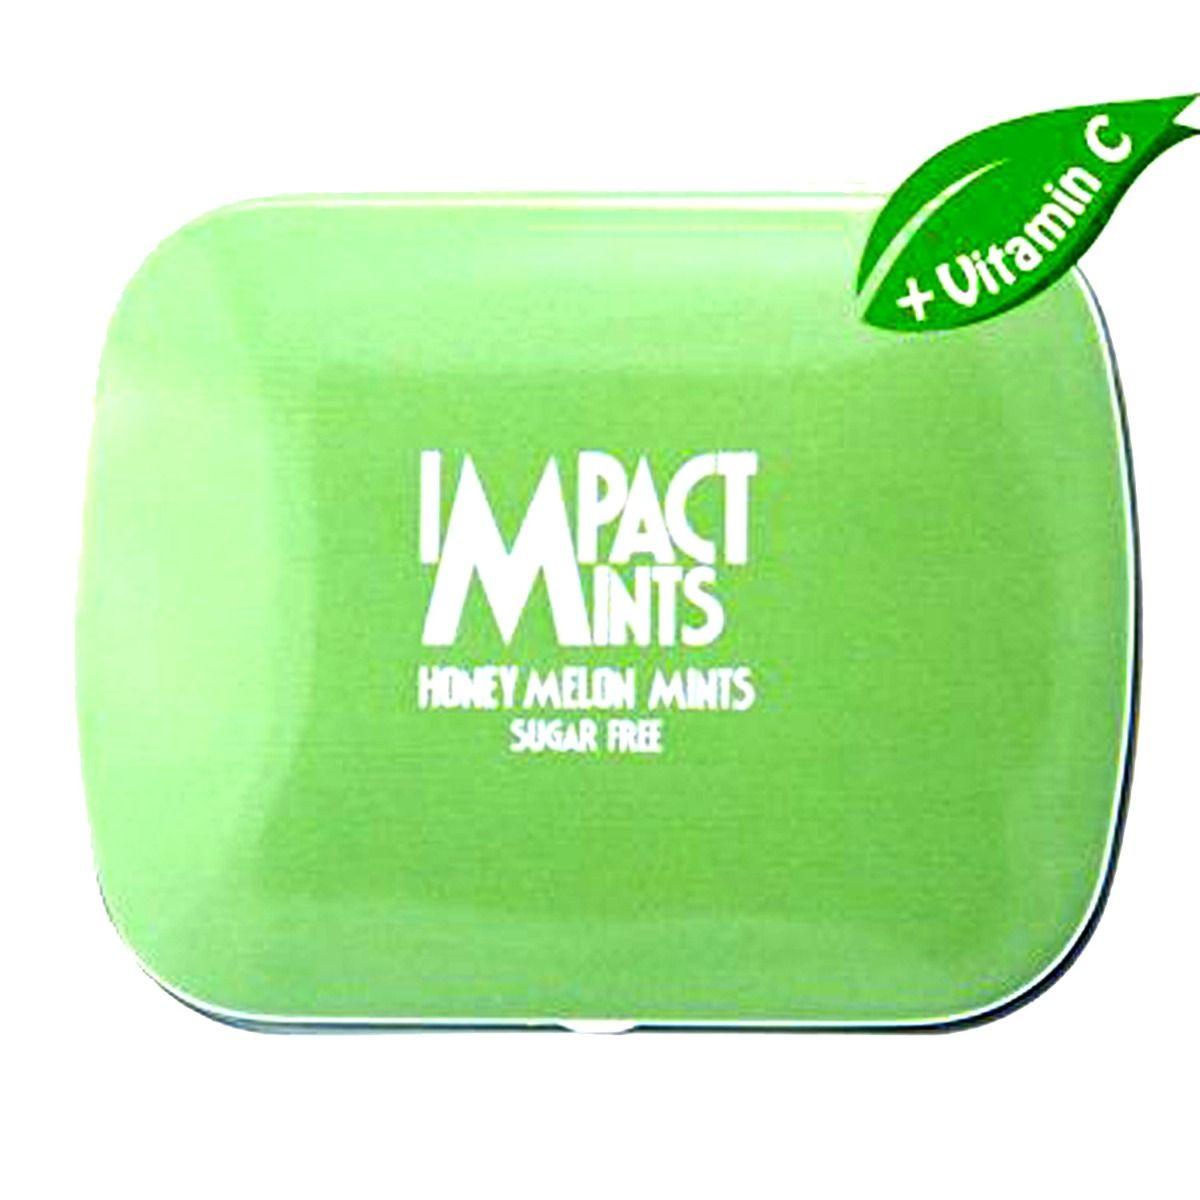 Buy Impact Sugar Free Honey Melon Mints, 16 gm Online